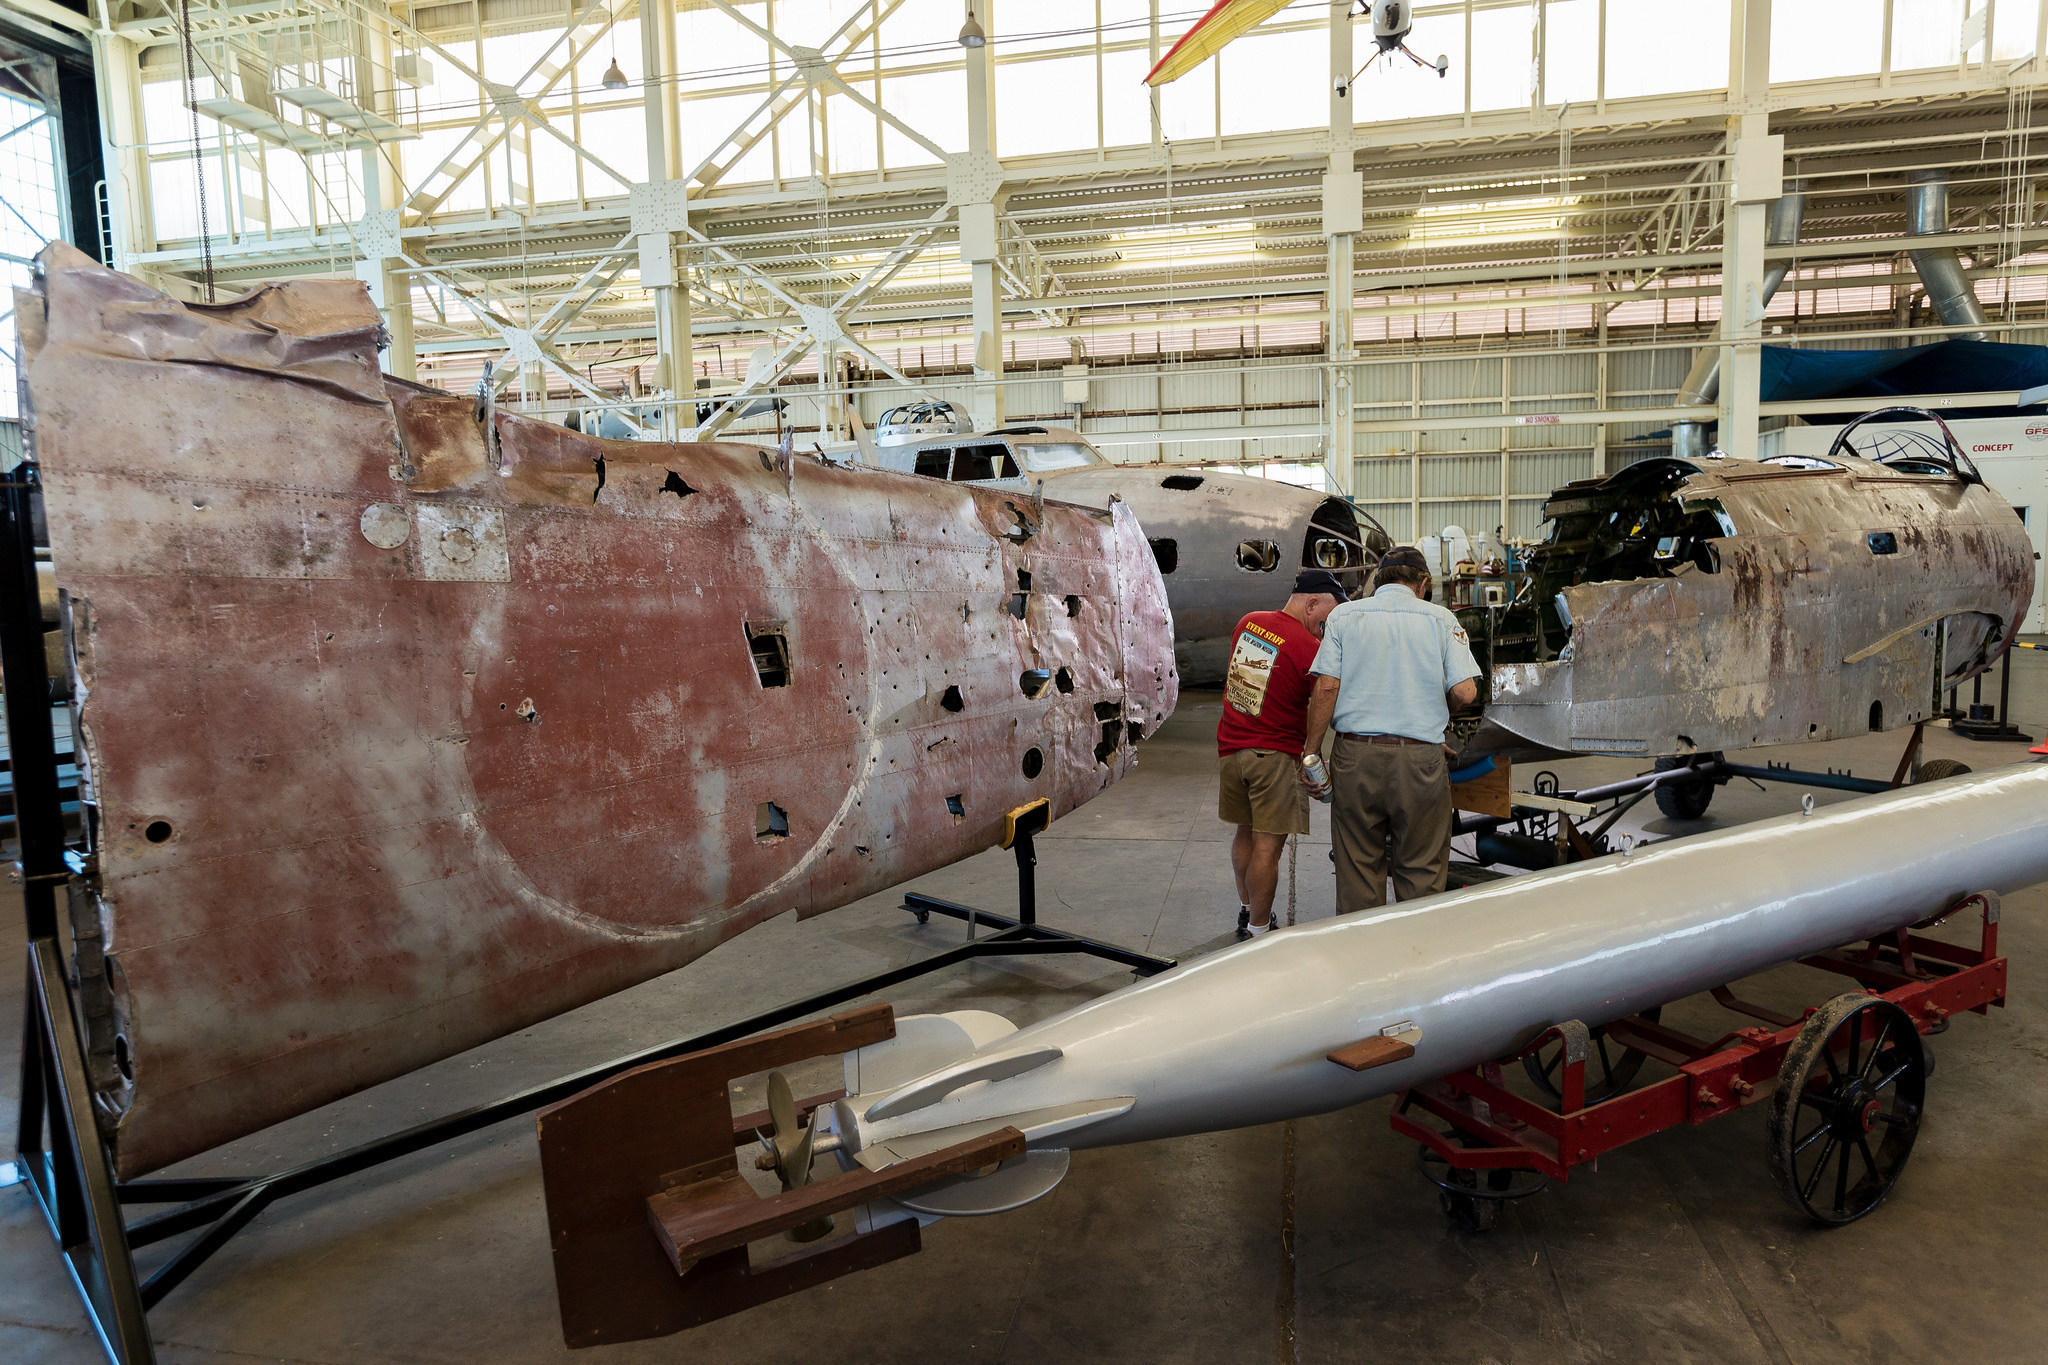 nakajima torpedo bomber - pacific aviation pearl harbor museum